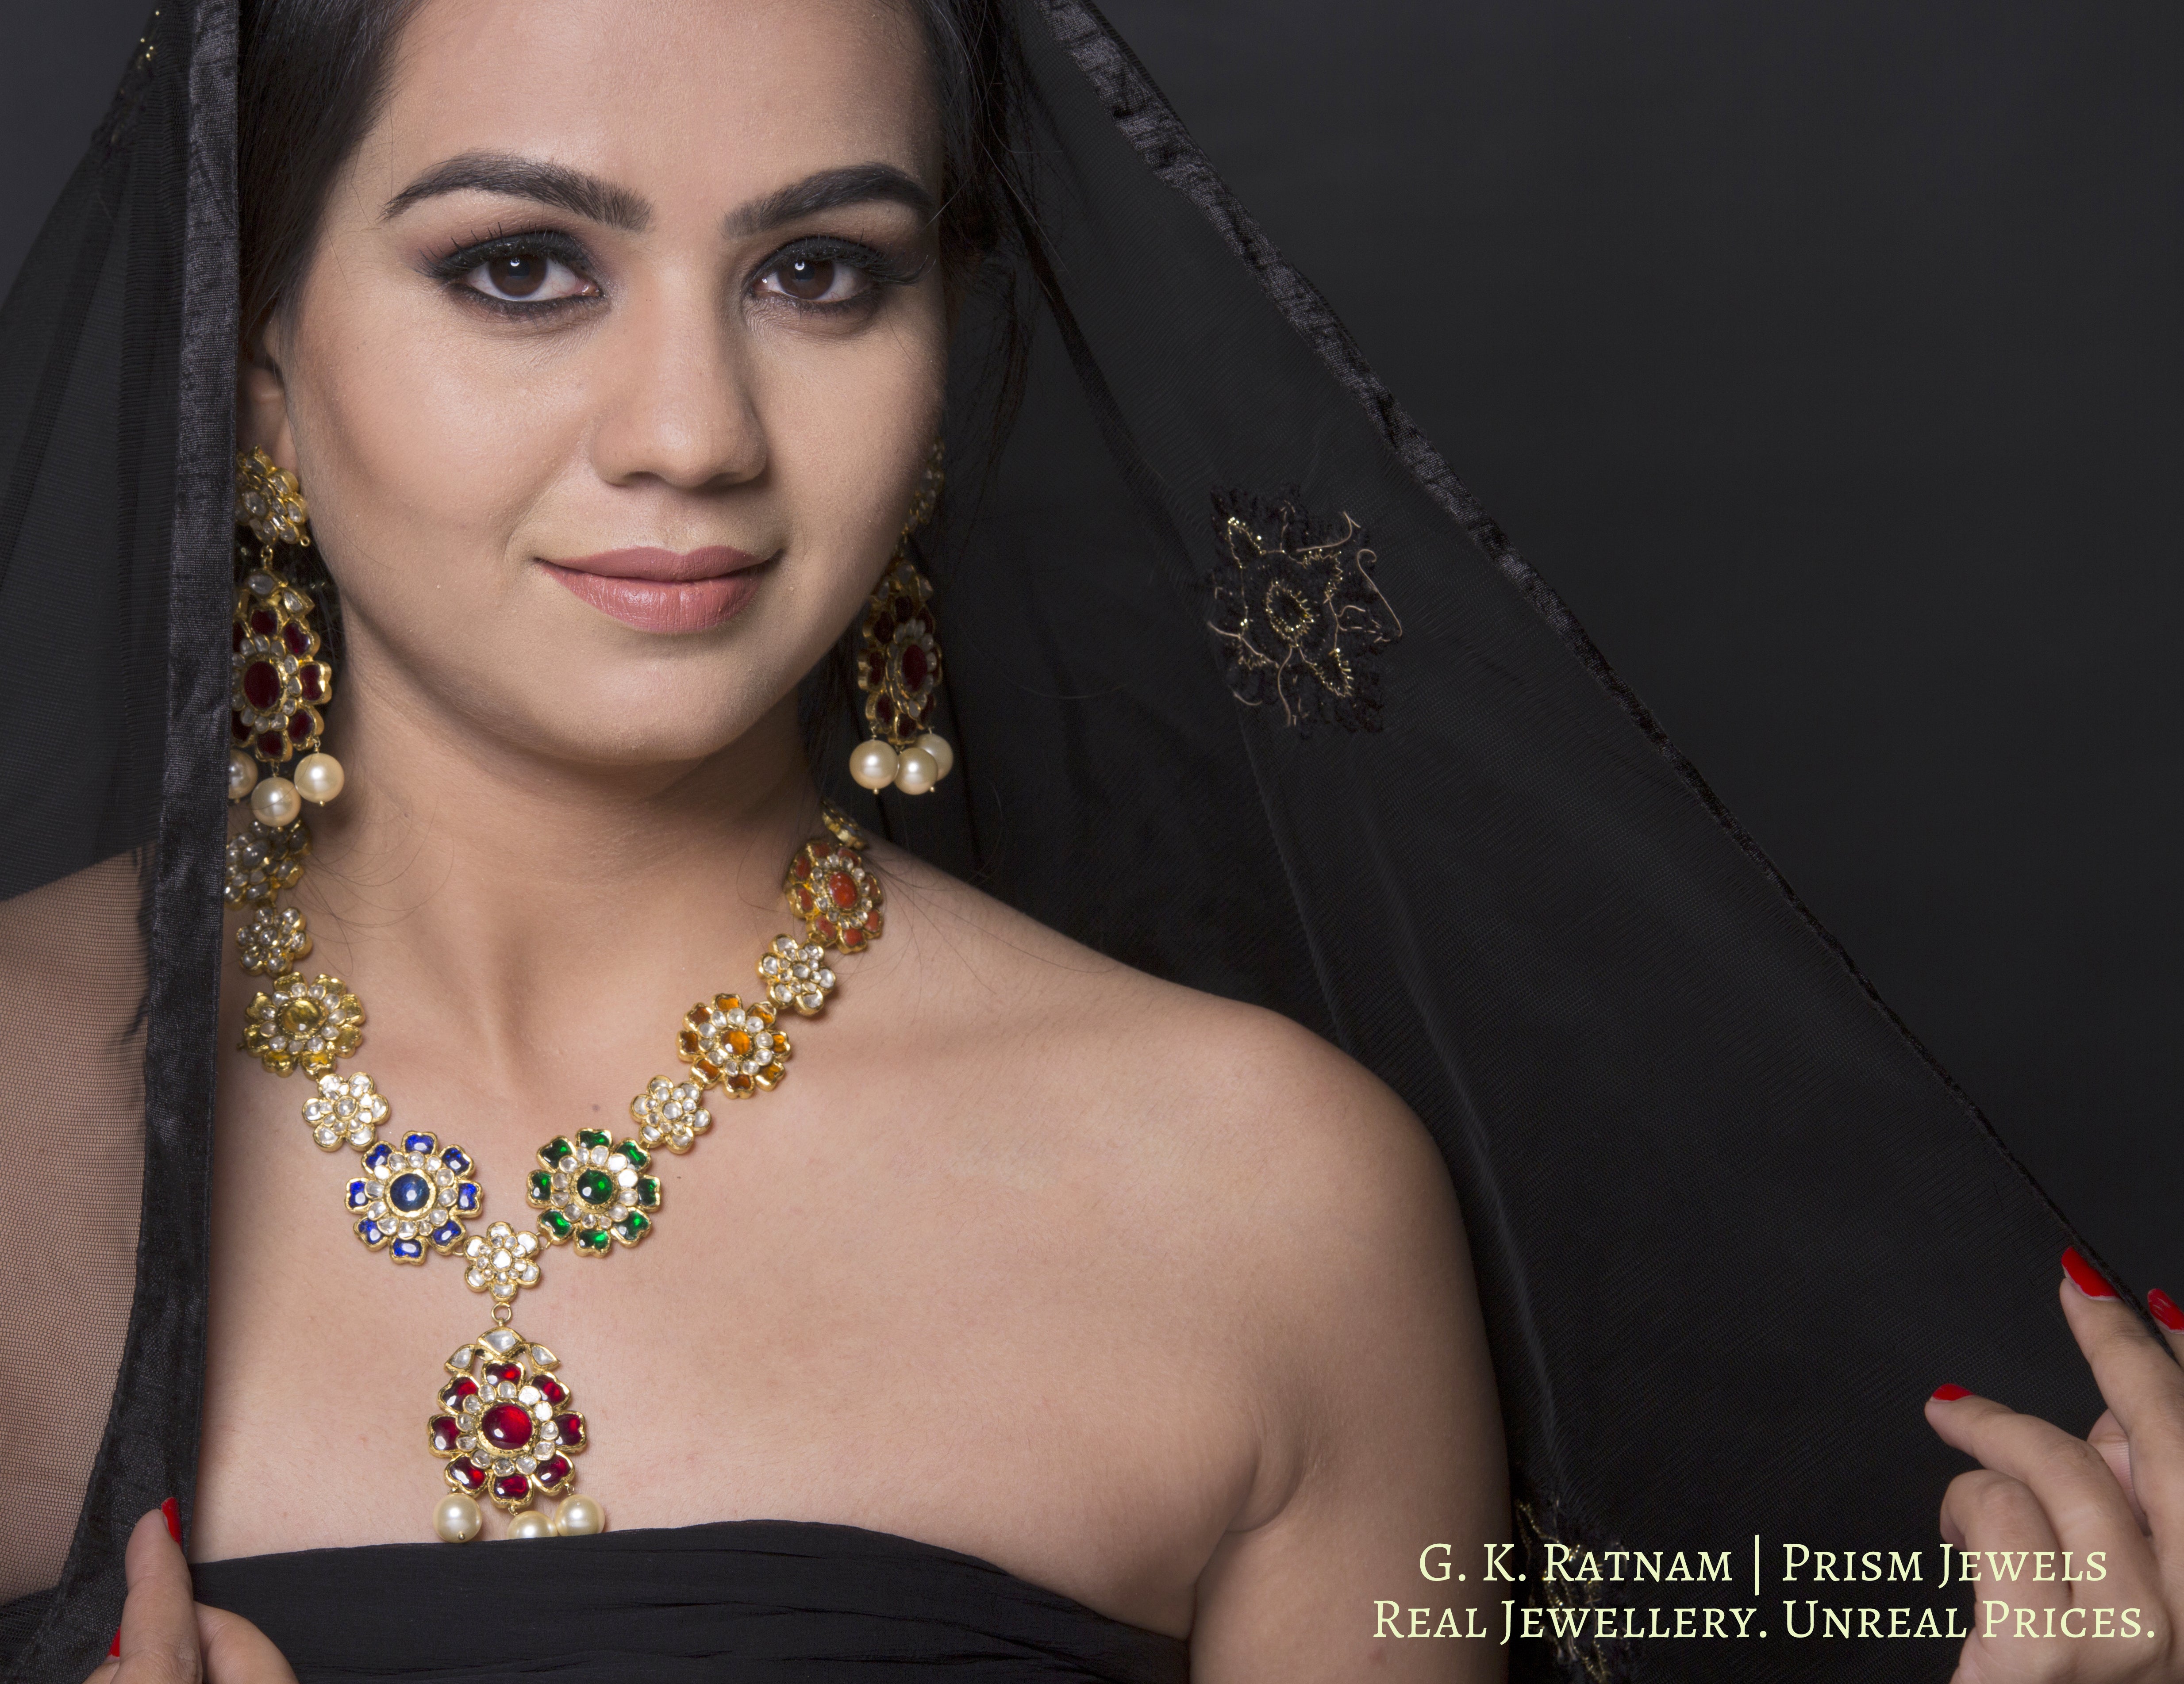 18k Gold and Diamond Polki Navratna Long Necklace Set with colorful flower-shaped tikdas - G. K. Ratnam